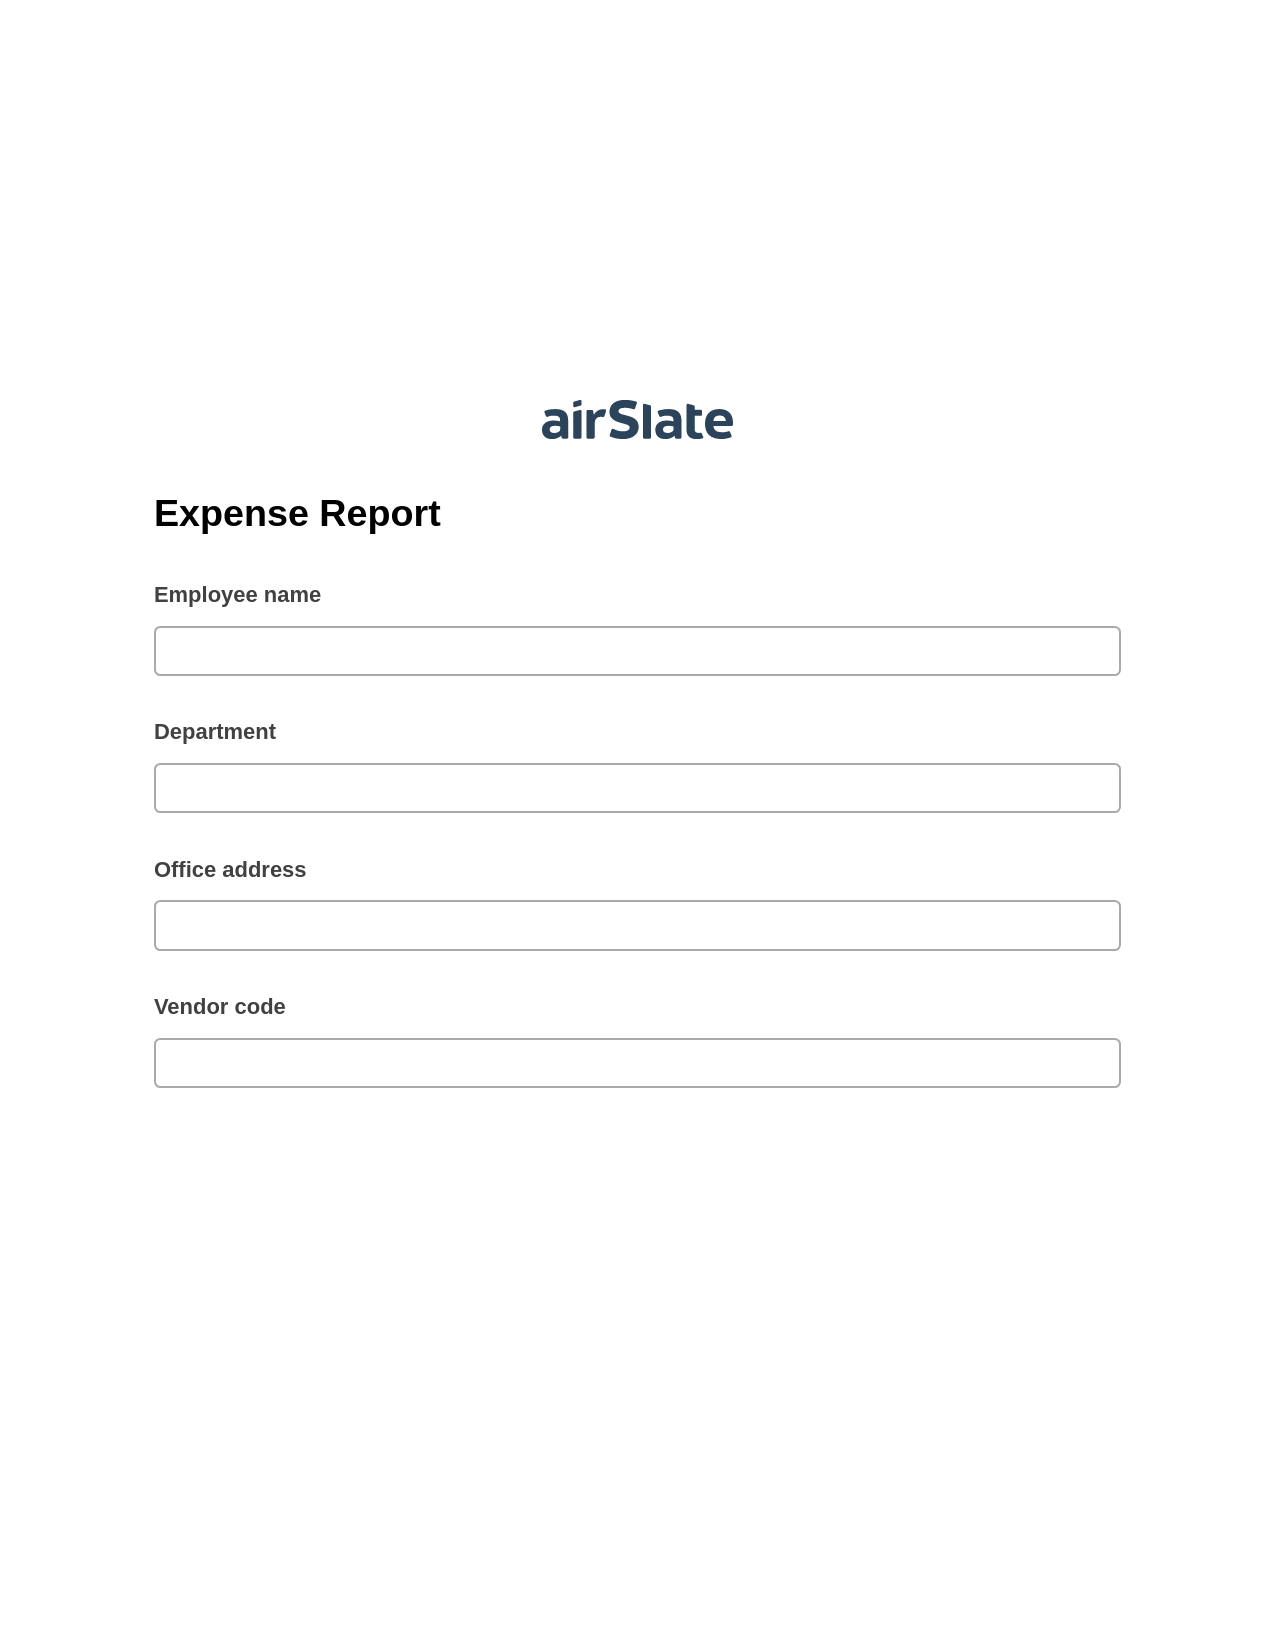 Multirole Expense Report Pre-fill from CSV File Bot, Reminder Bot, Webhook Postfinish Bot